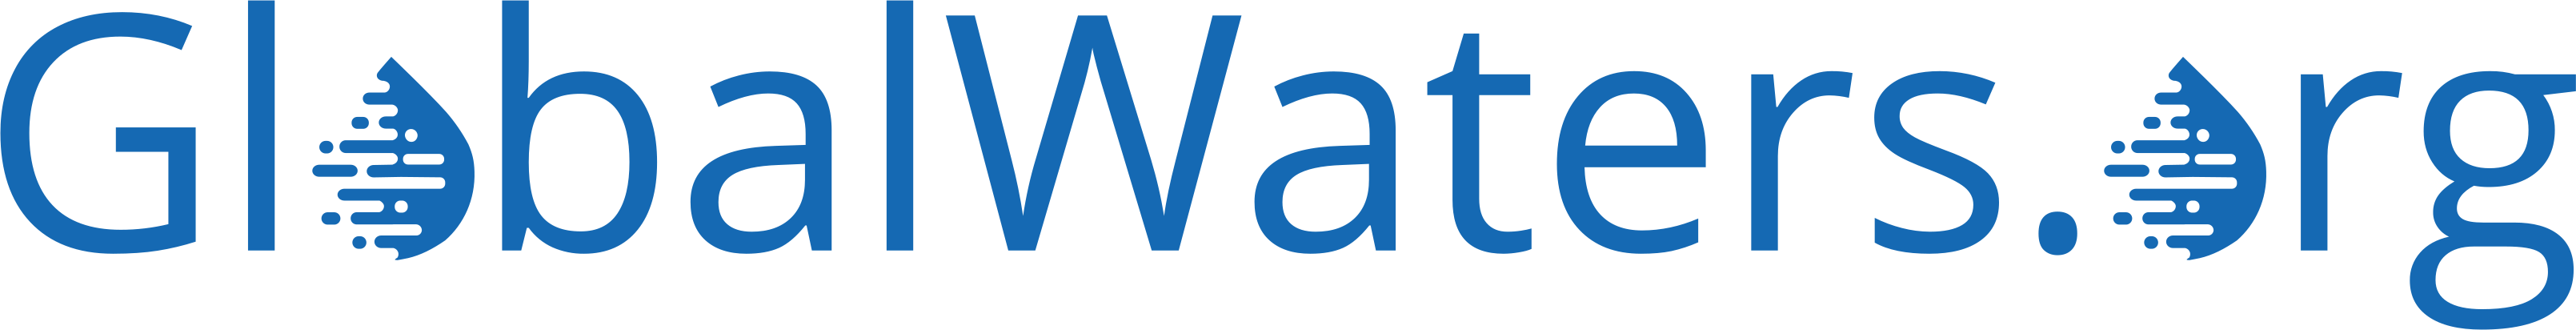 logo-globalwaters